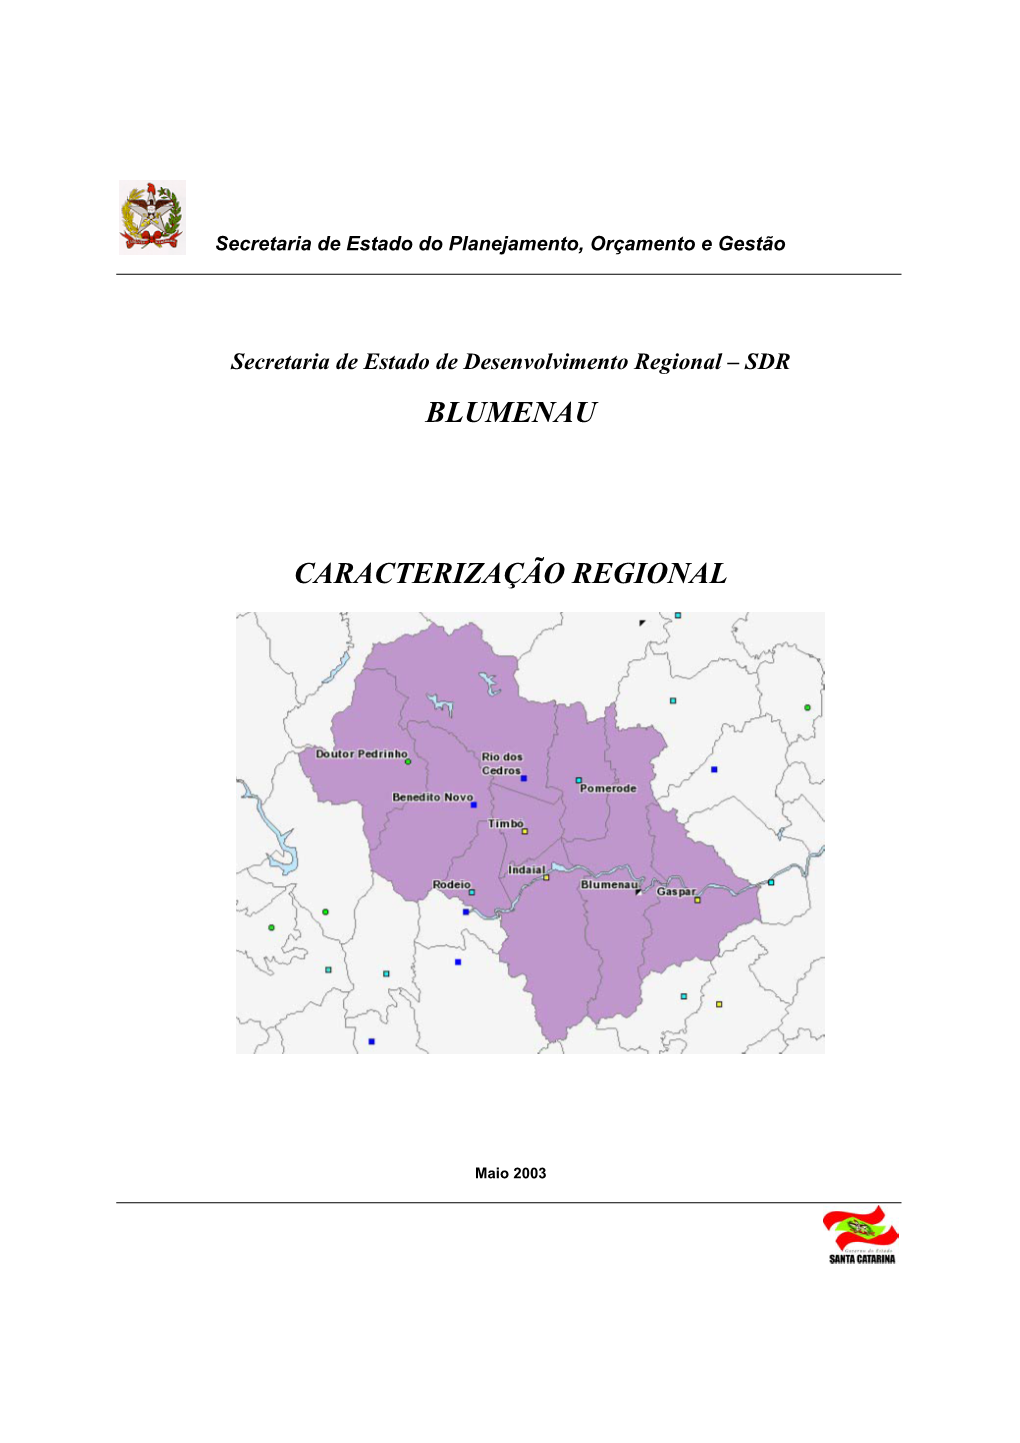 Blumenau Caracterização Regional